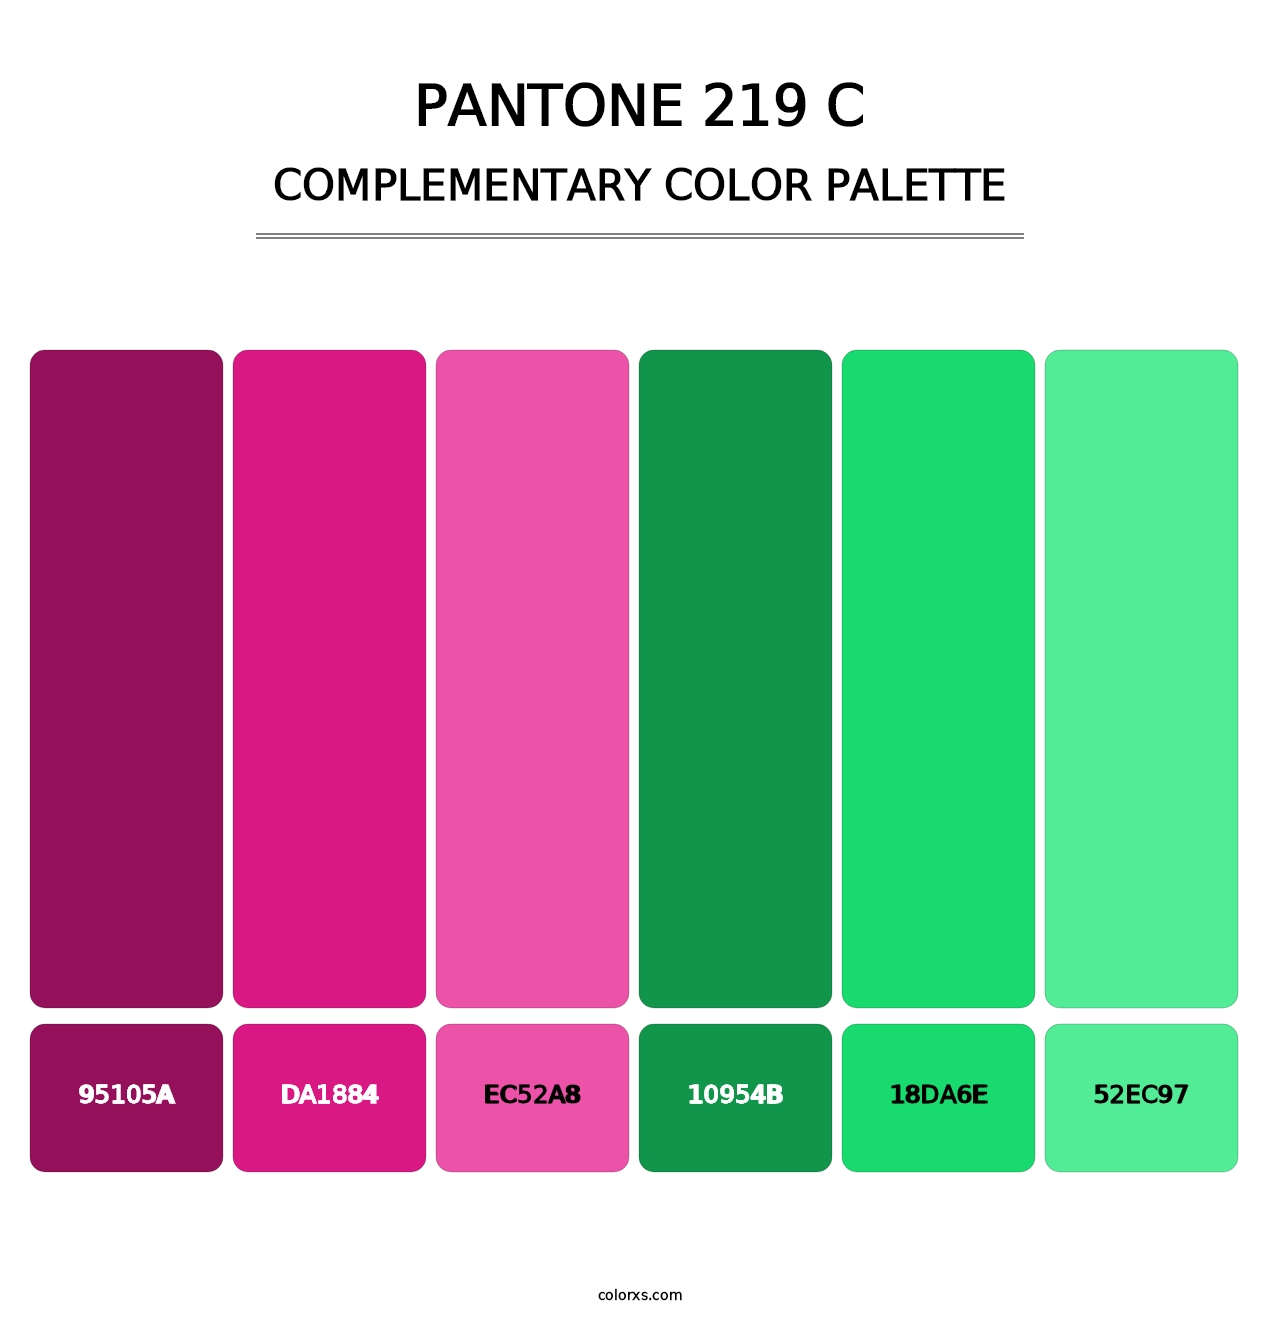 PANTONE 219 C - Complementary Color Palette